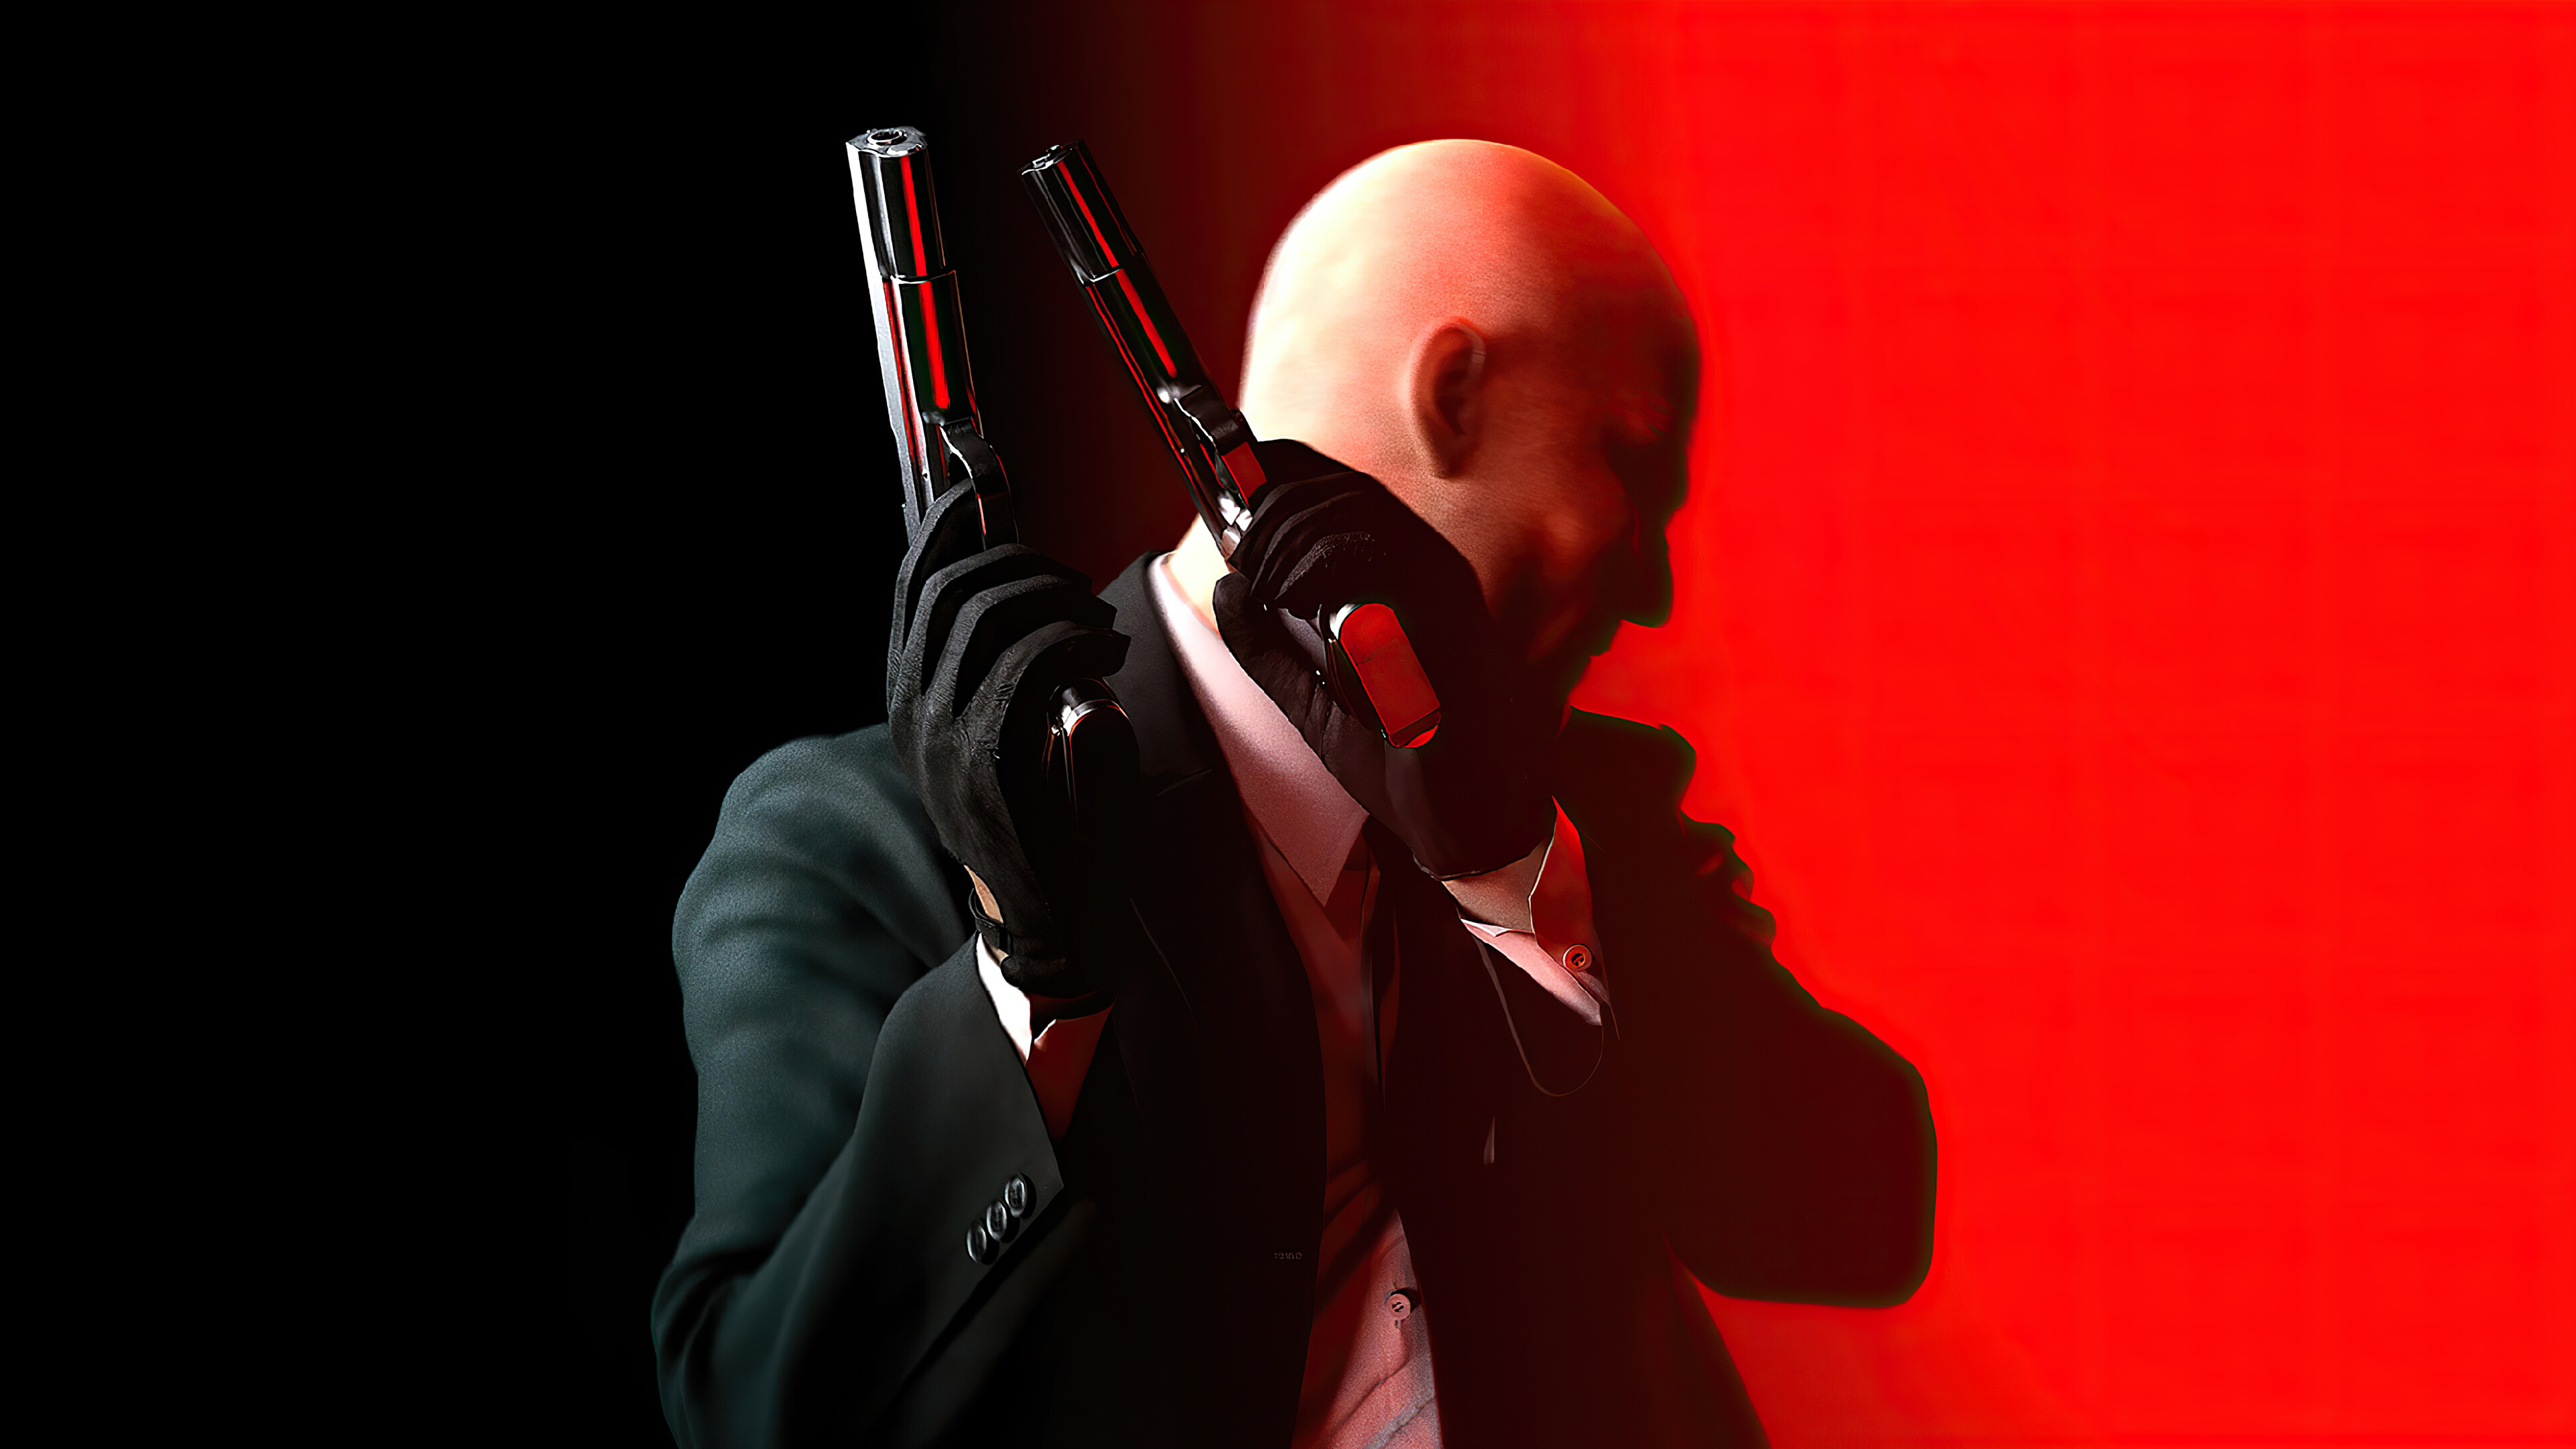 Hitman (Game): Agent 47, A genetically enhanced human being. 3840x2160 4K Wallpaper.